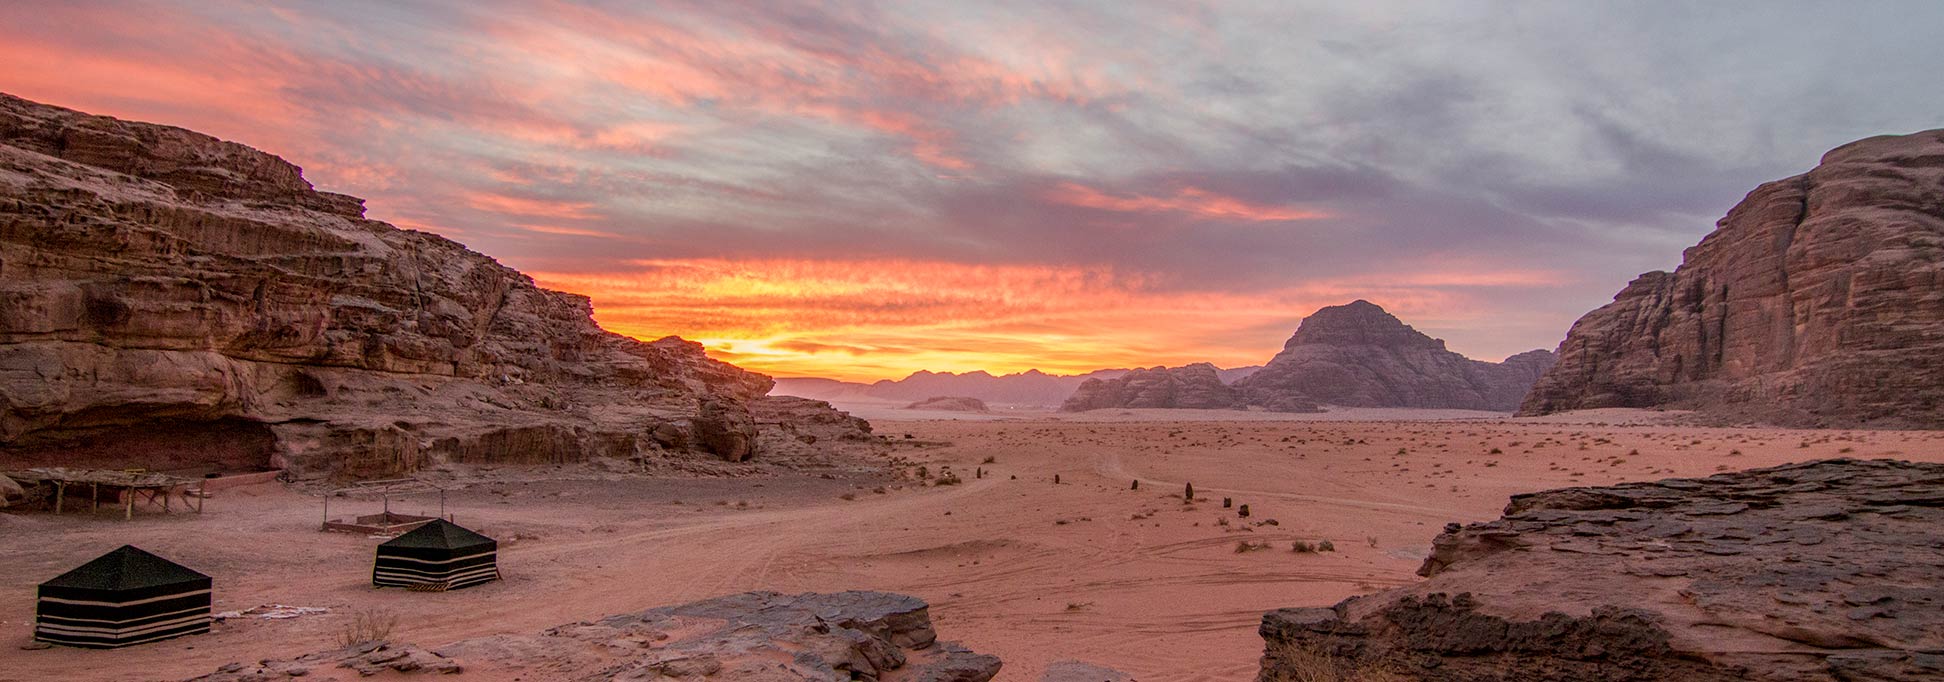 Protected landscape of Wadi Rum in southern Jordan